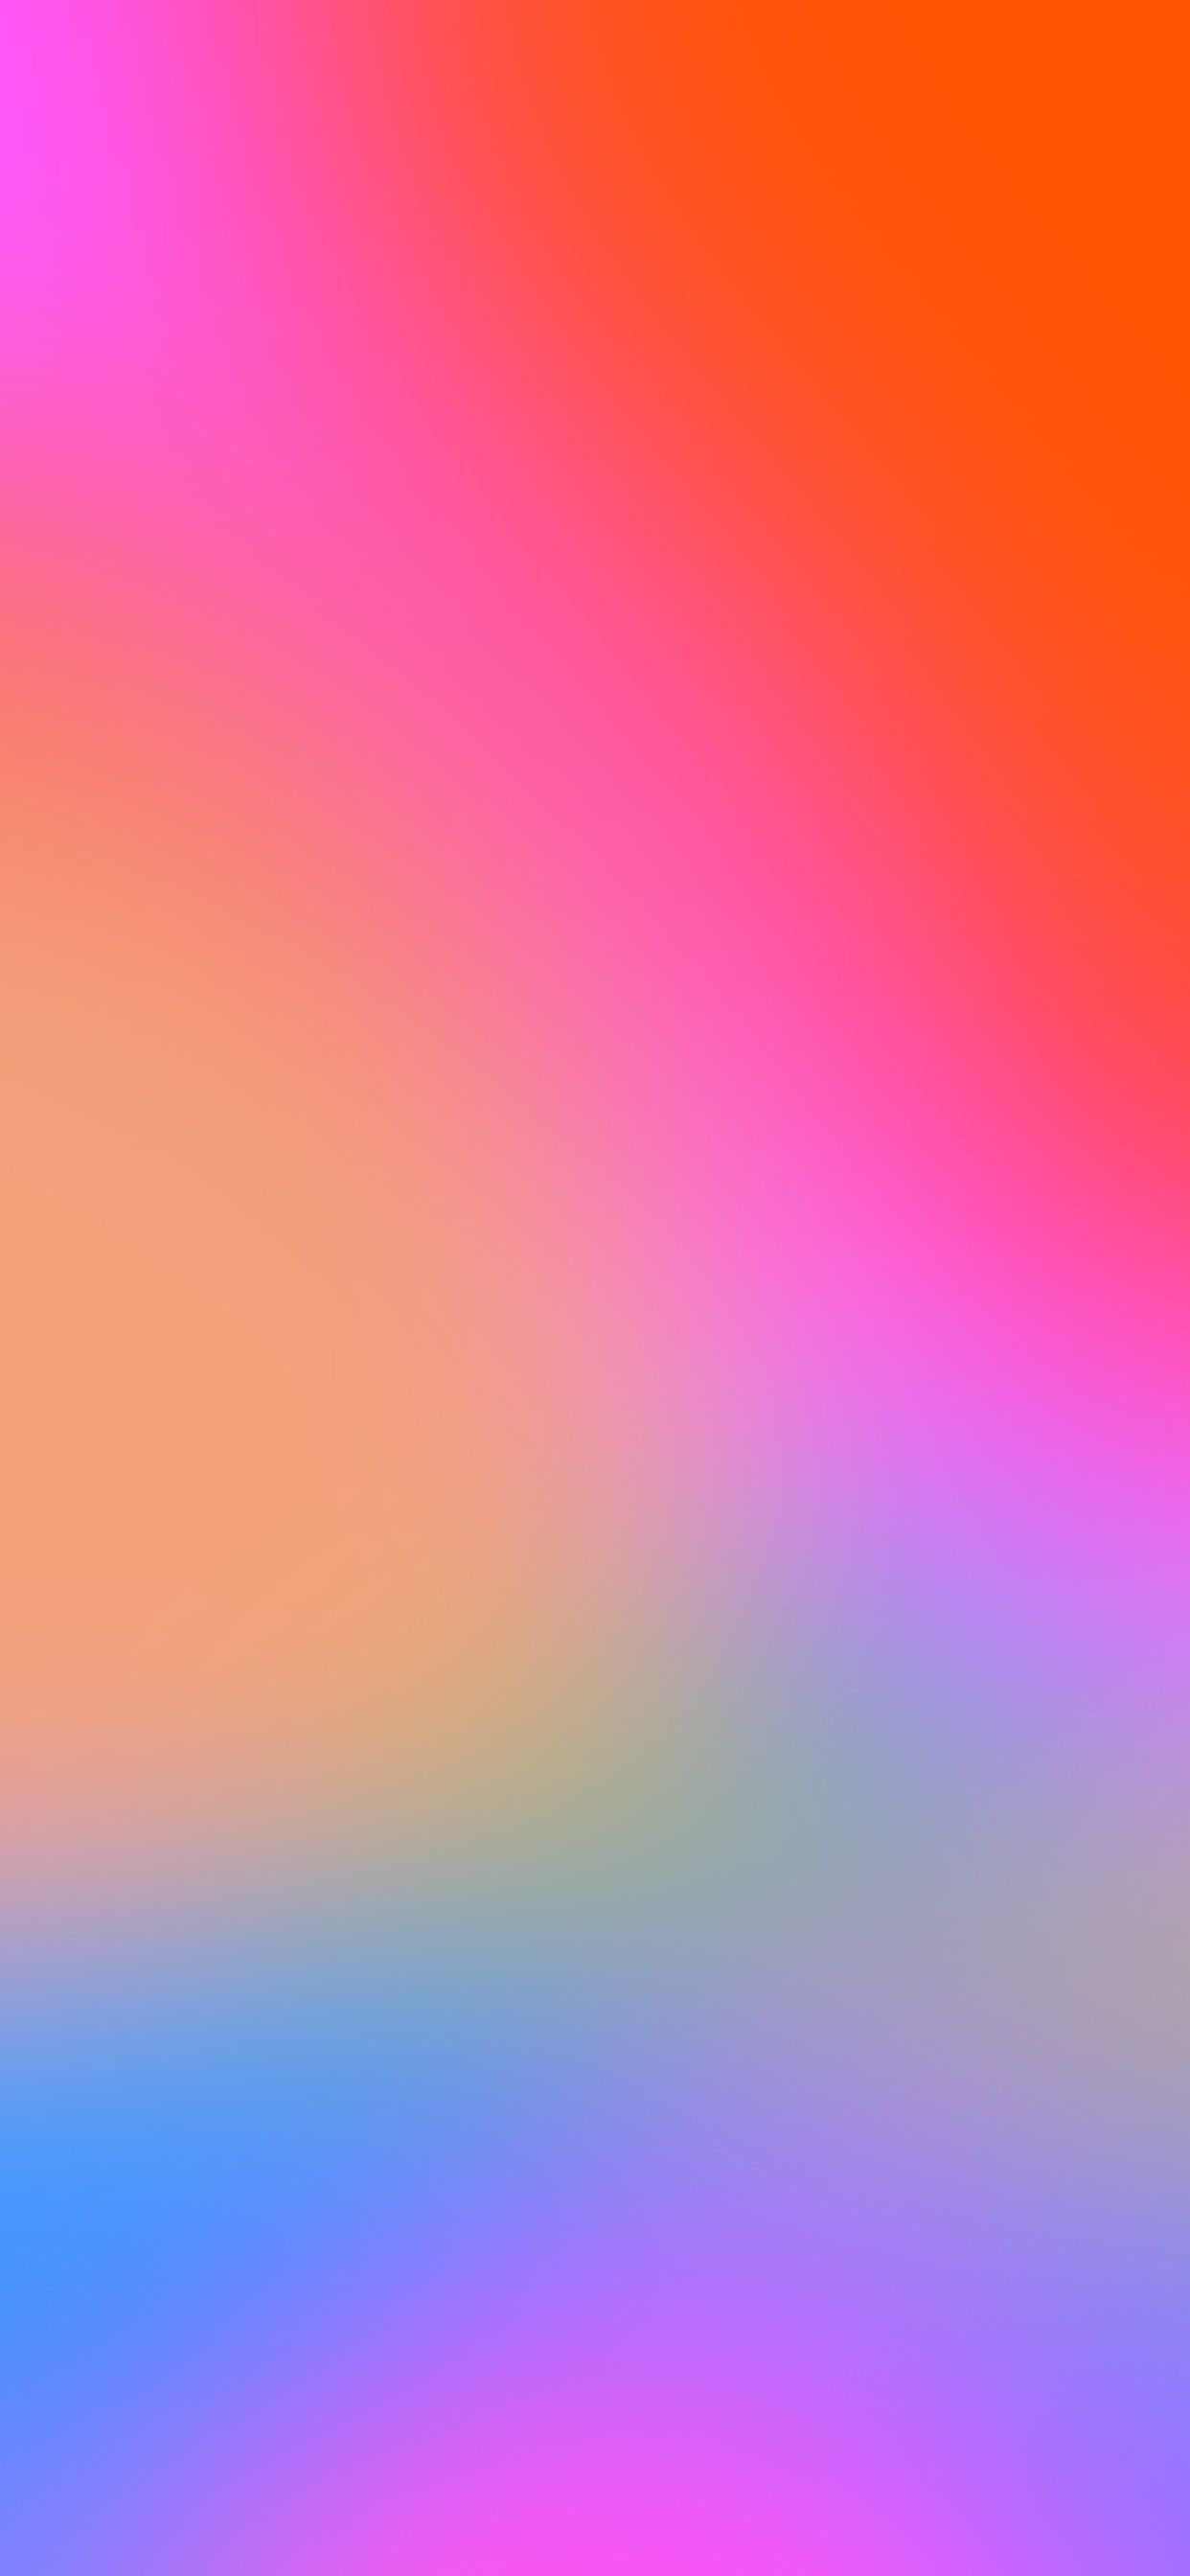 1242x2688 abstract #gradient #colors #digitalpainting #iphonewallpaper #photoshop #lines #stains #fluid | Plain wallpaper iphone, Android wallpaper, Hd wallpaper android